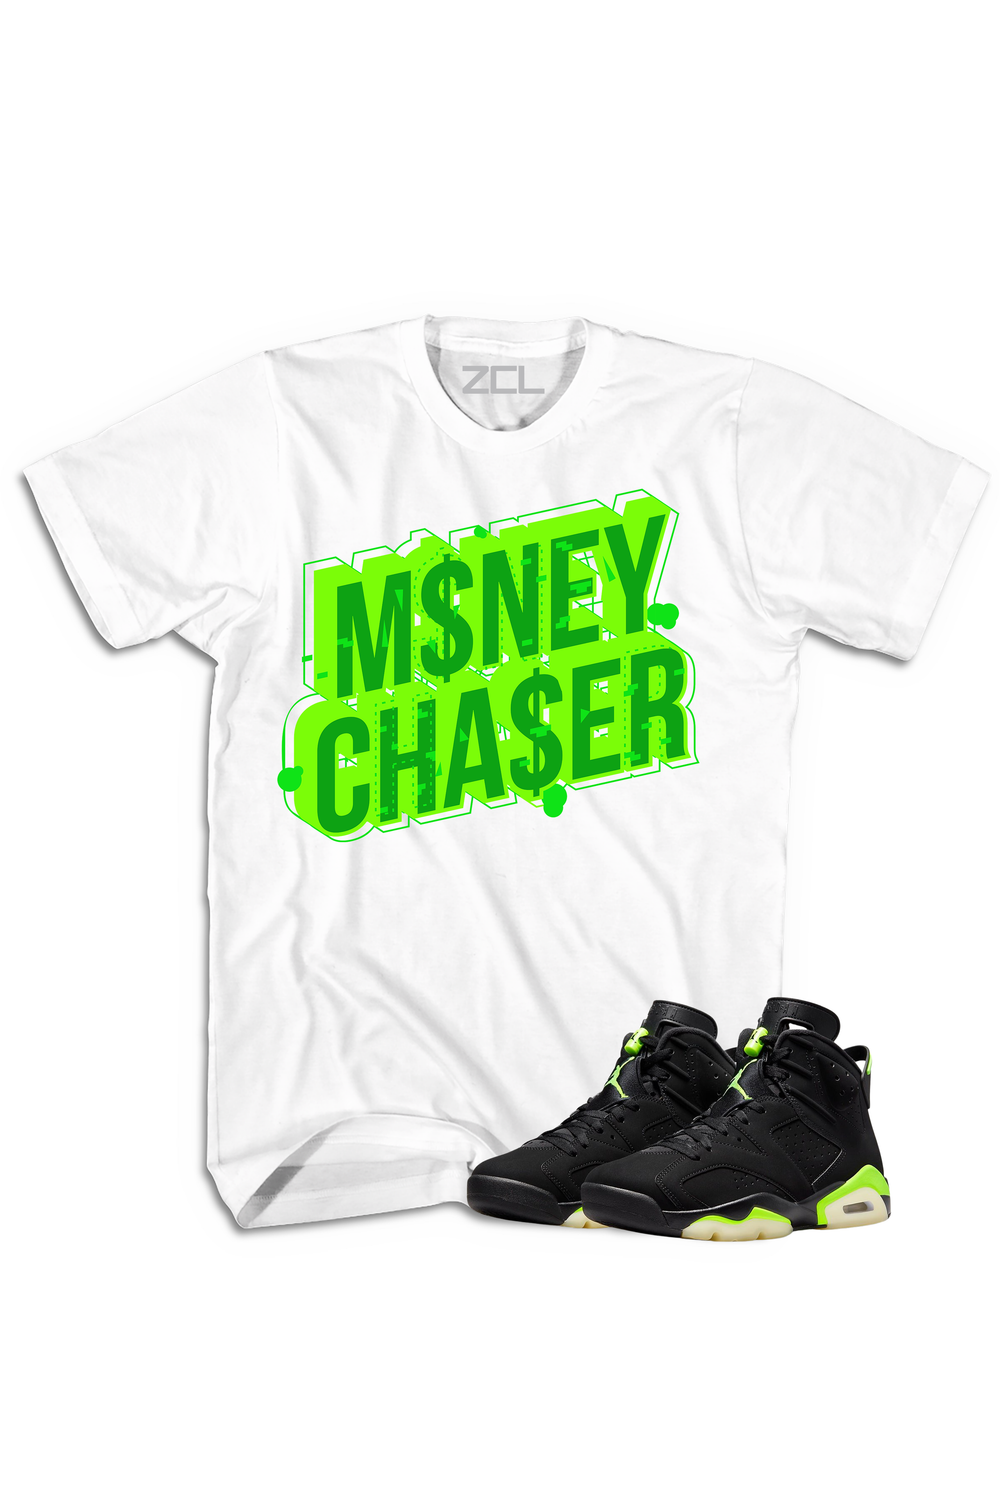 Air Jordan 6 "Money Chaser" Tee (Electric Green) - Zamage